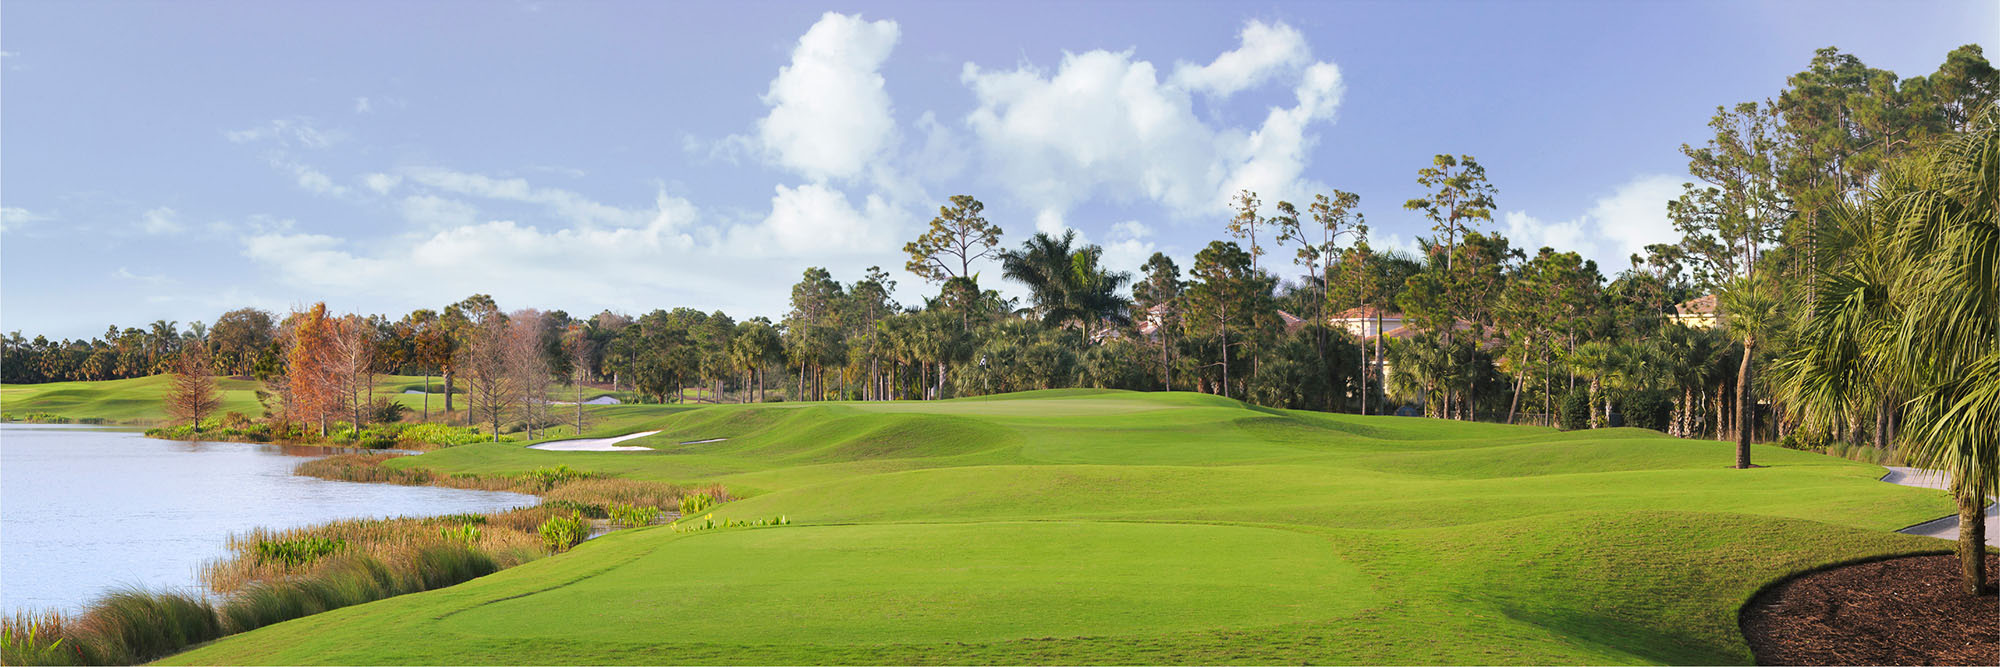 Golf Course Image - Mirasol Sunrise No. 8